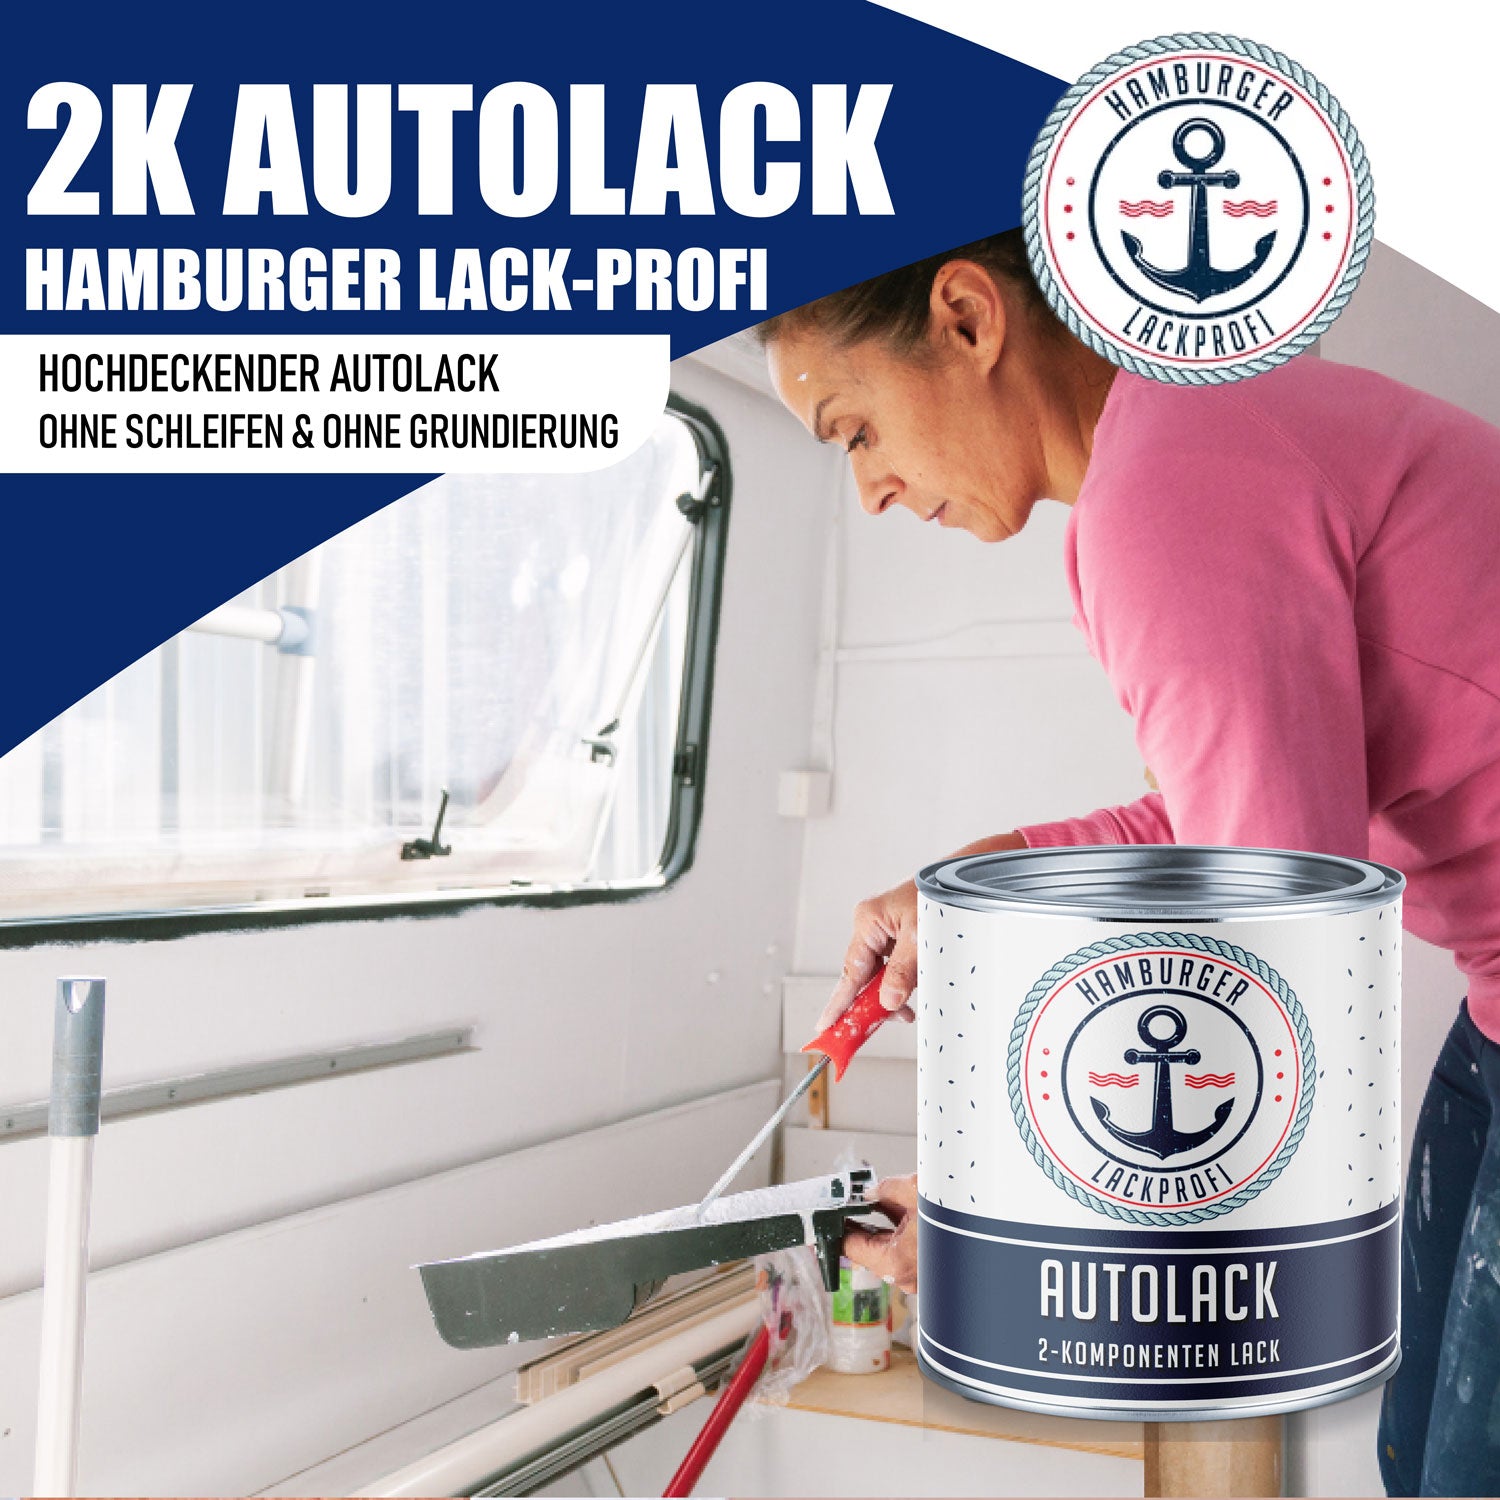 Hamburger Lack-Profi 2K Autolack Azurblau RAL 5009 - hochdeckend & rostschützend